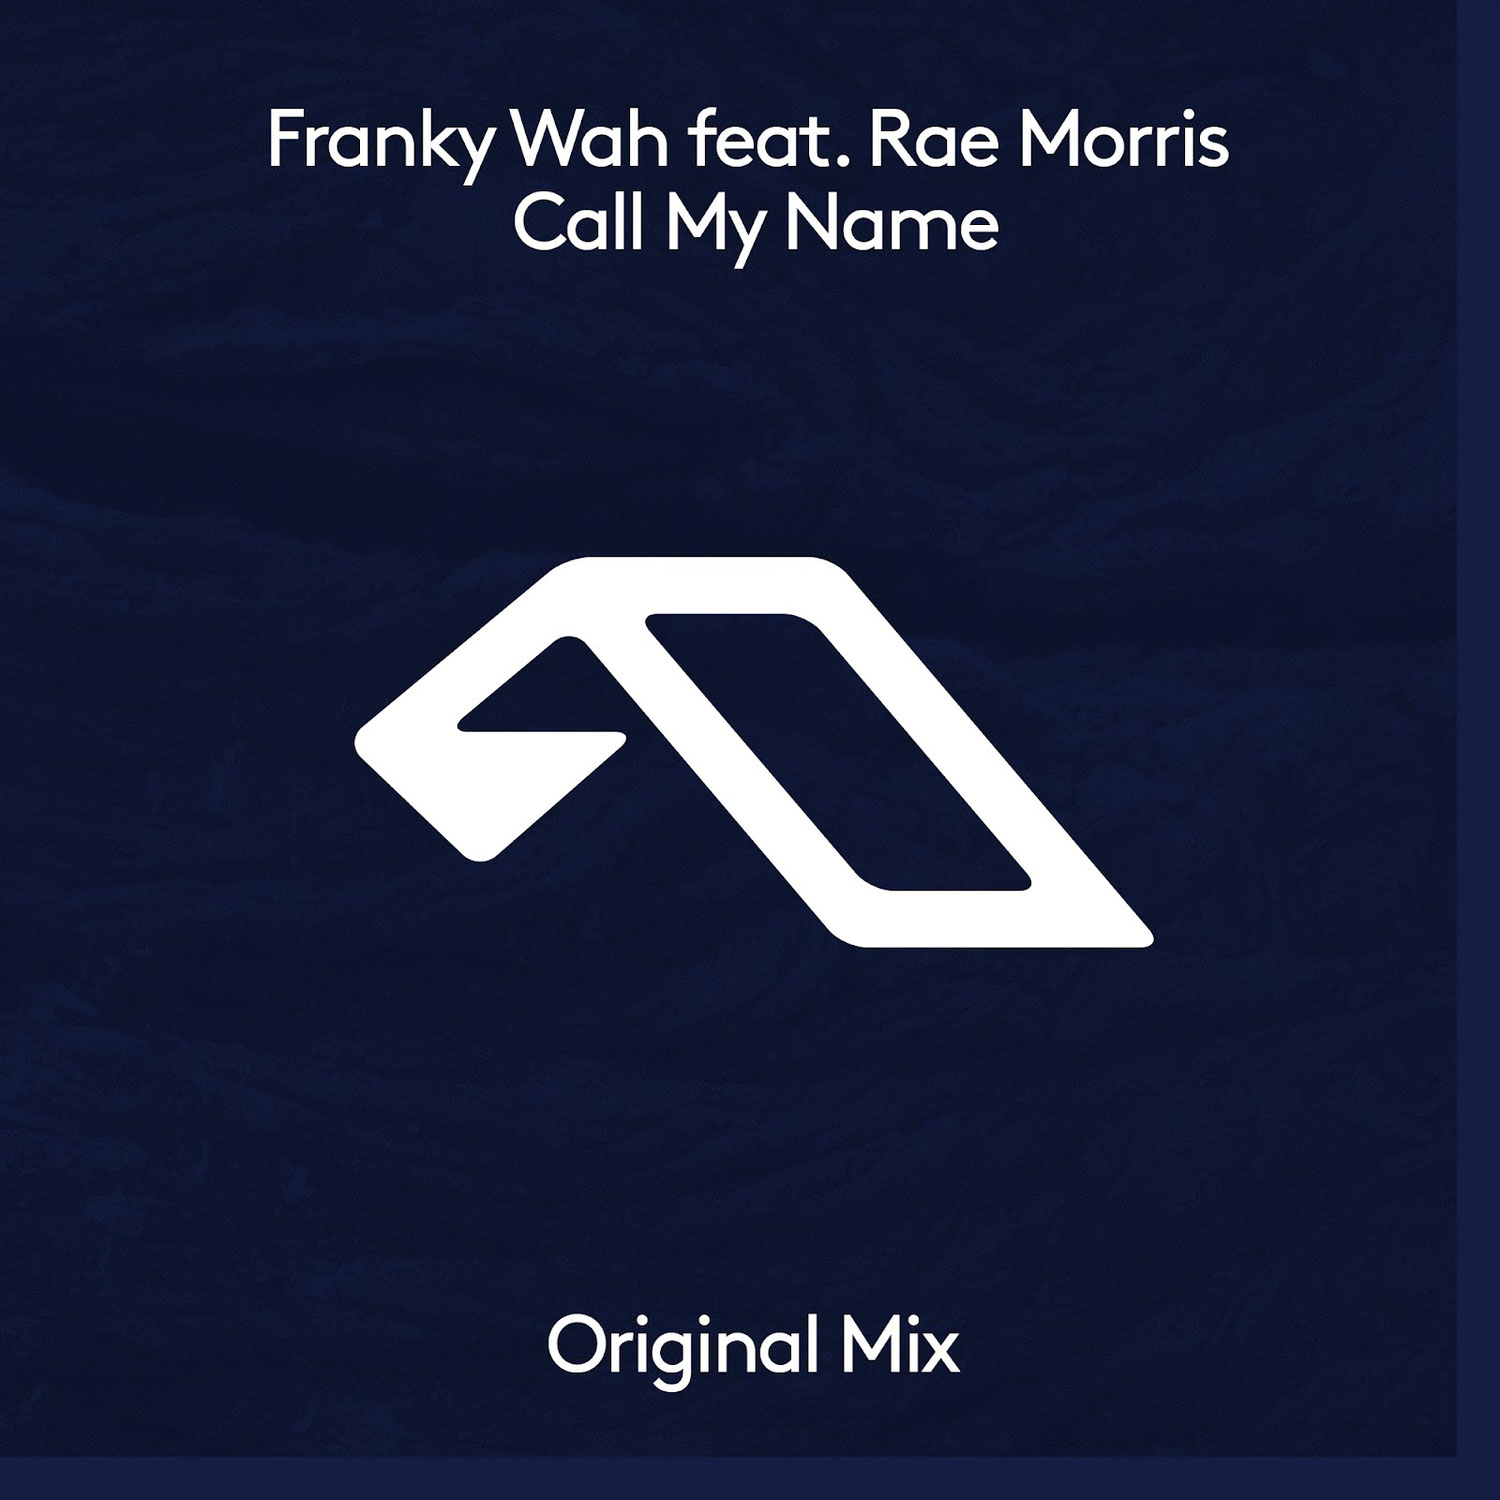 Franky Wah feat. Rae Morris